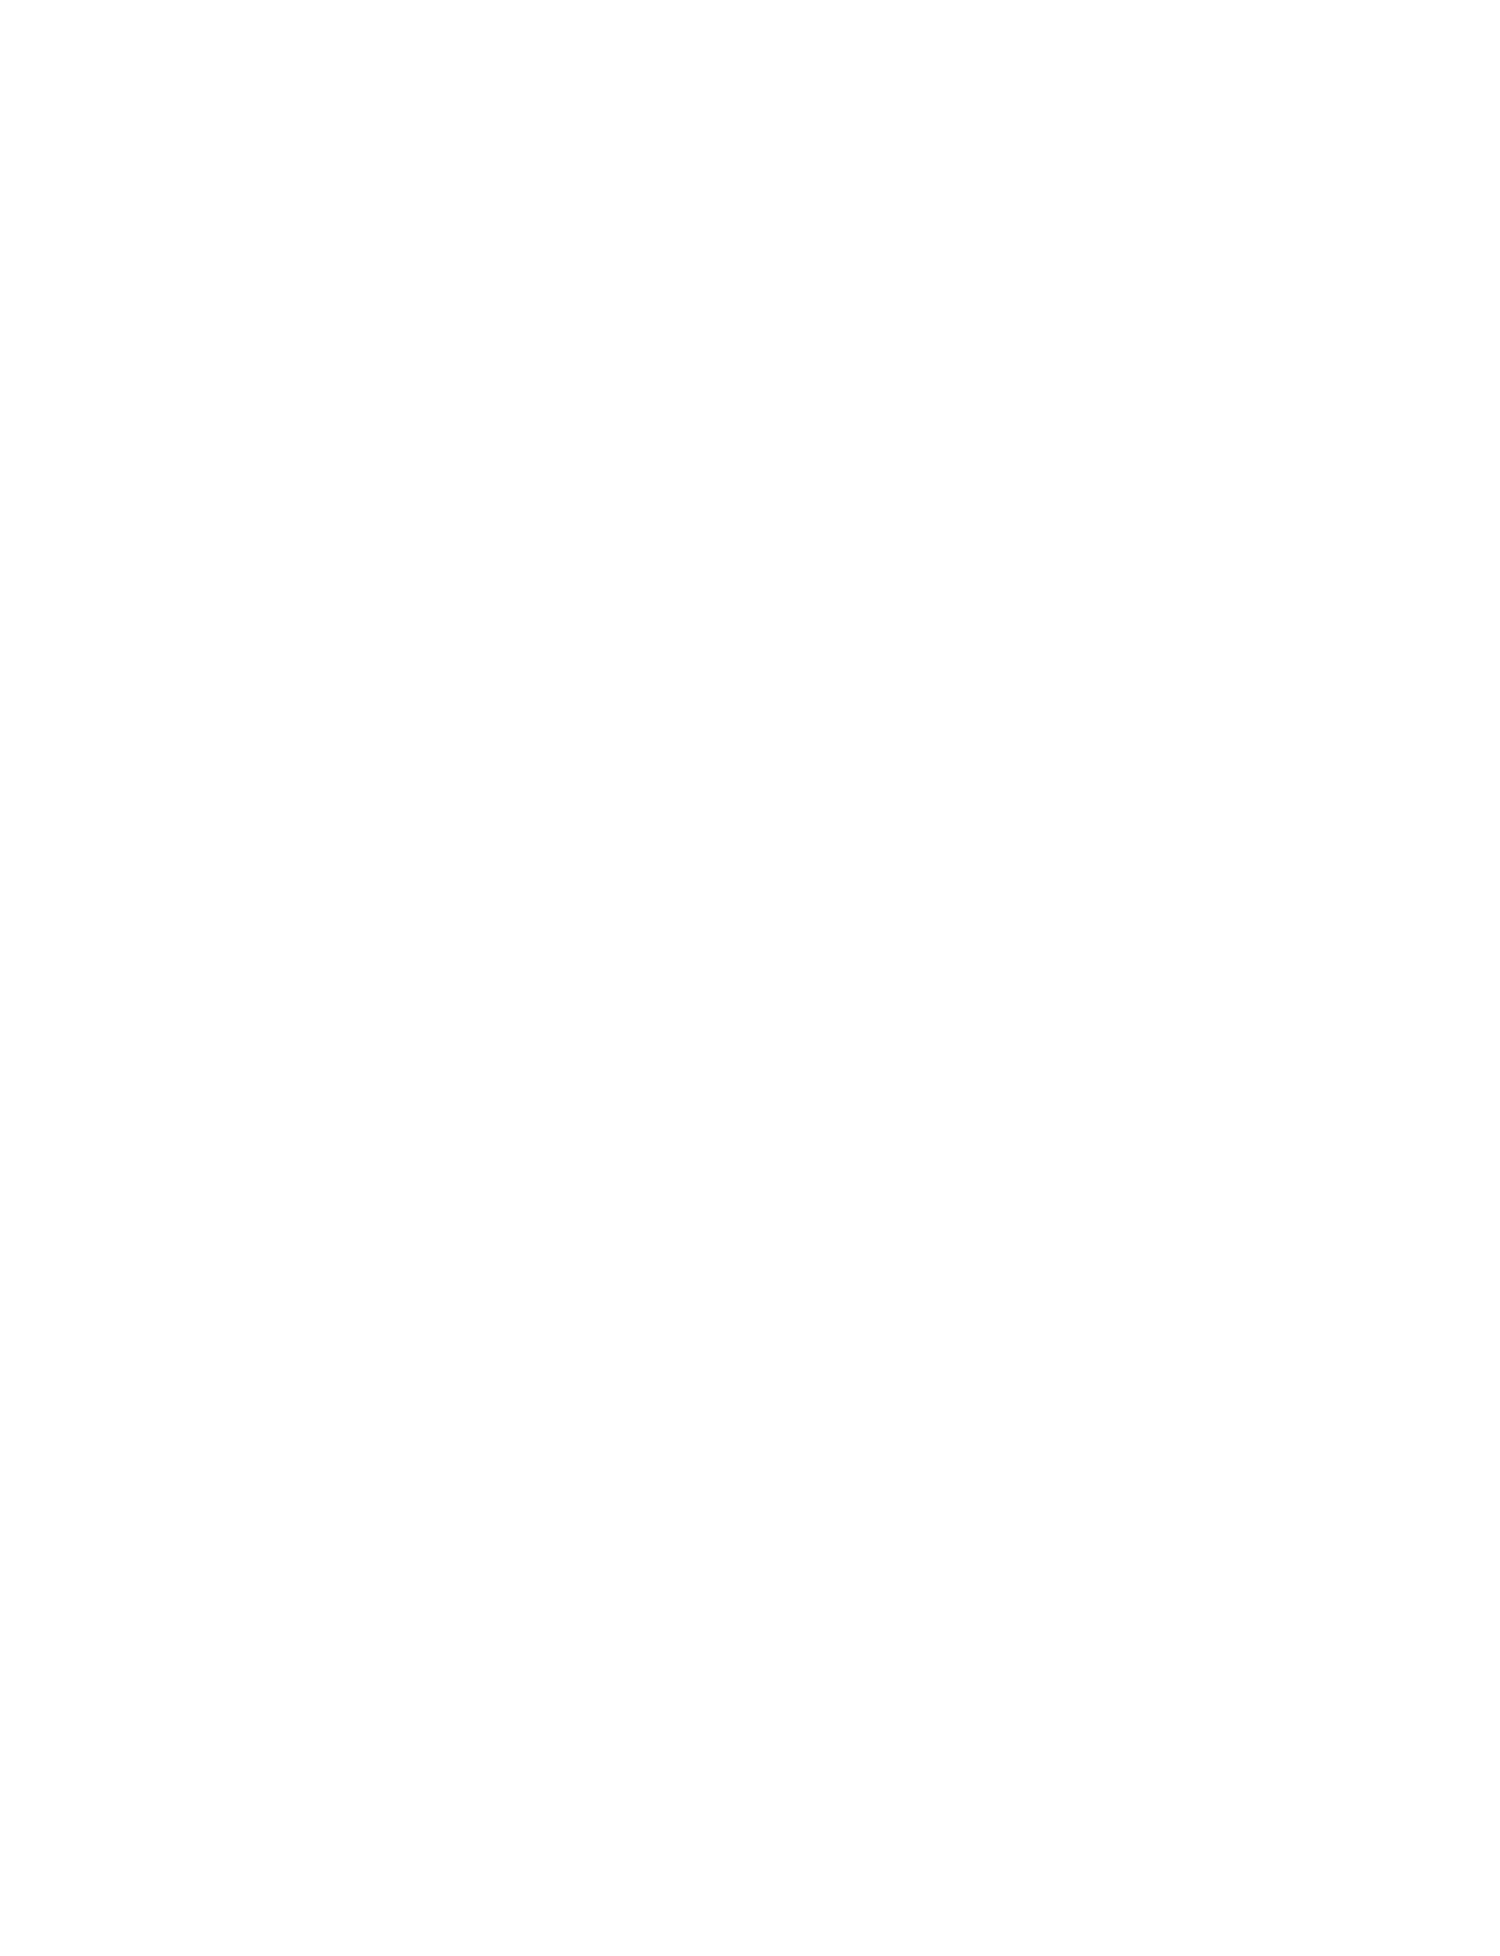 TTV Hotak '68